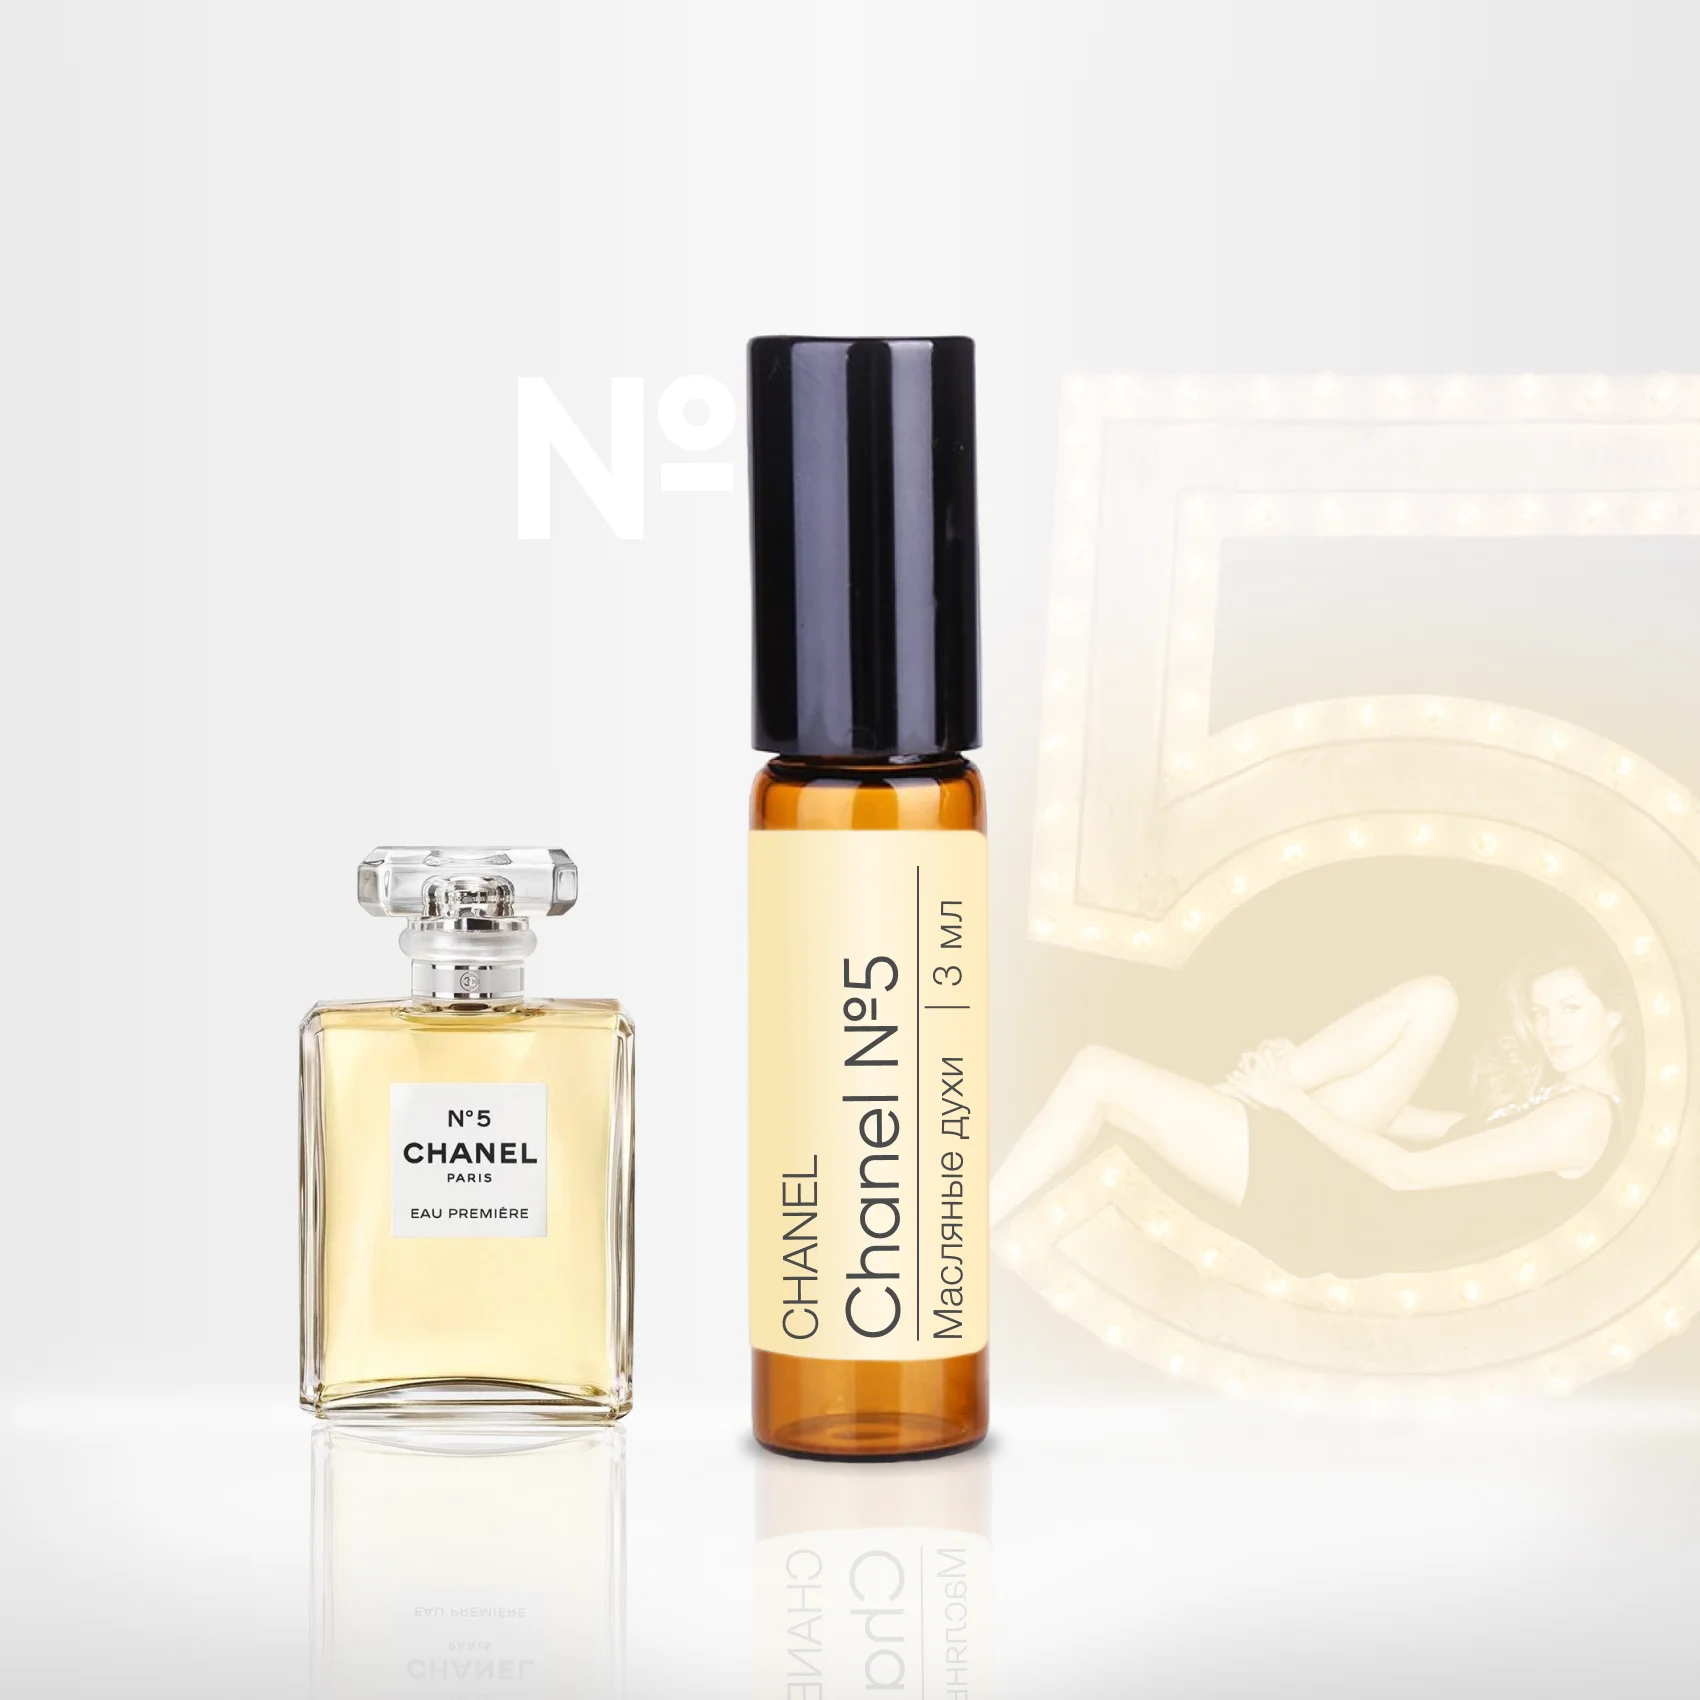 Aromako perfume oil roller motifs brand Chanel Chanel No. 5, 3